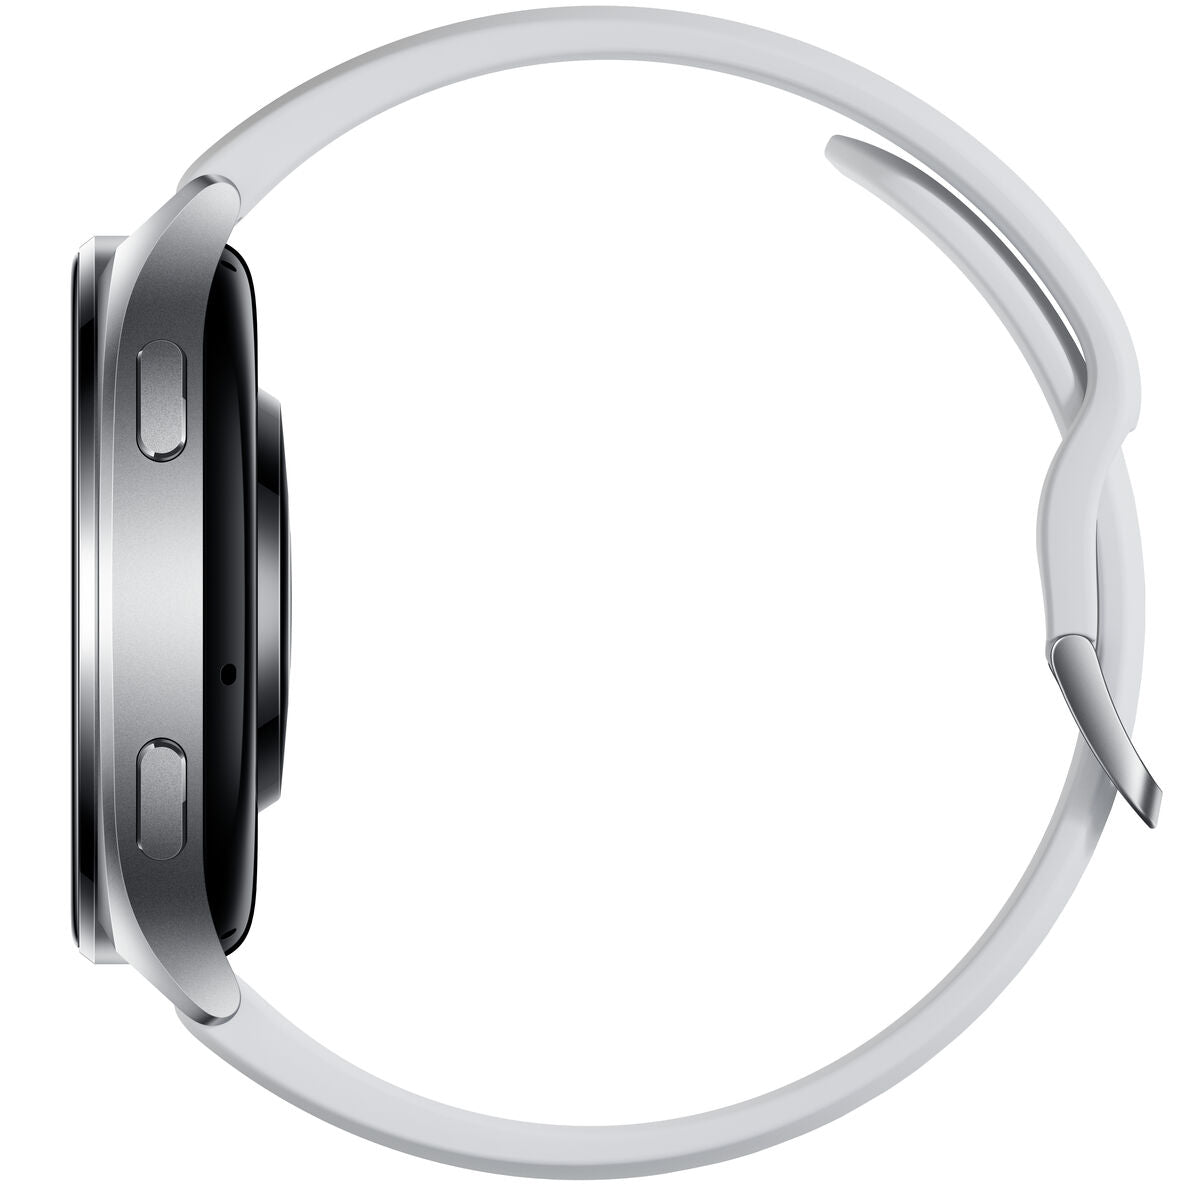 Kaufe Smartwatch Xiaomi Watch 2 Schwarz Silberfarben Ø 46 mm bei AWK Flagship um € 200.00